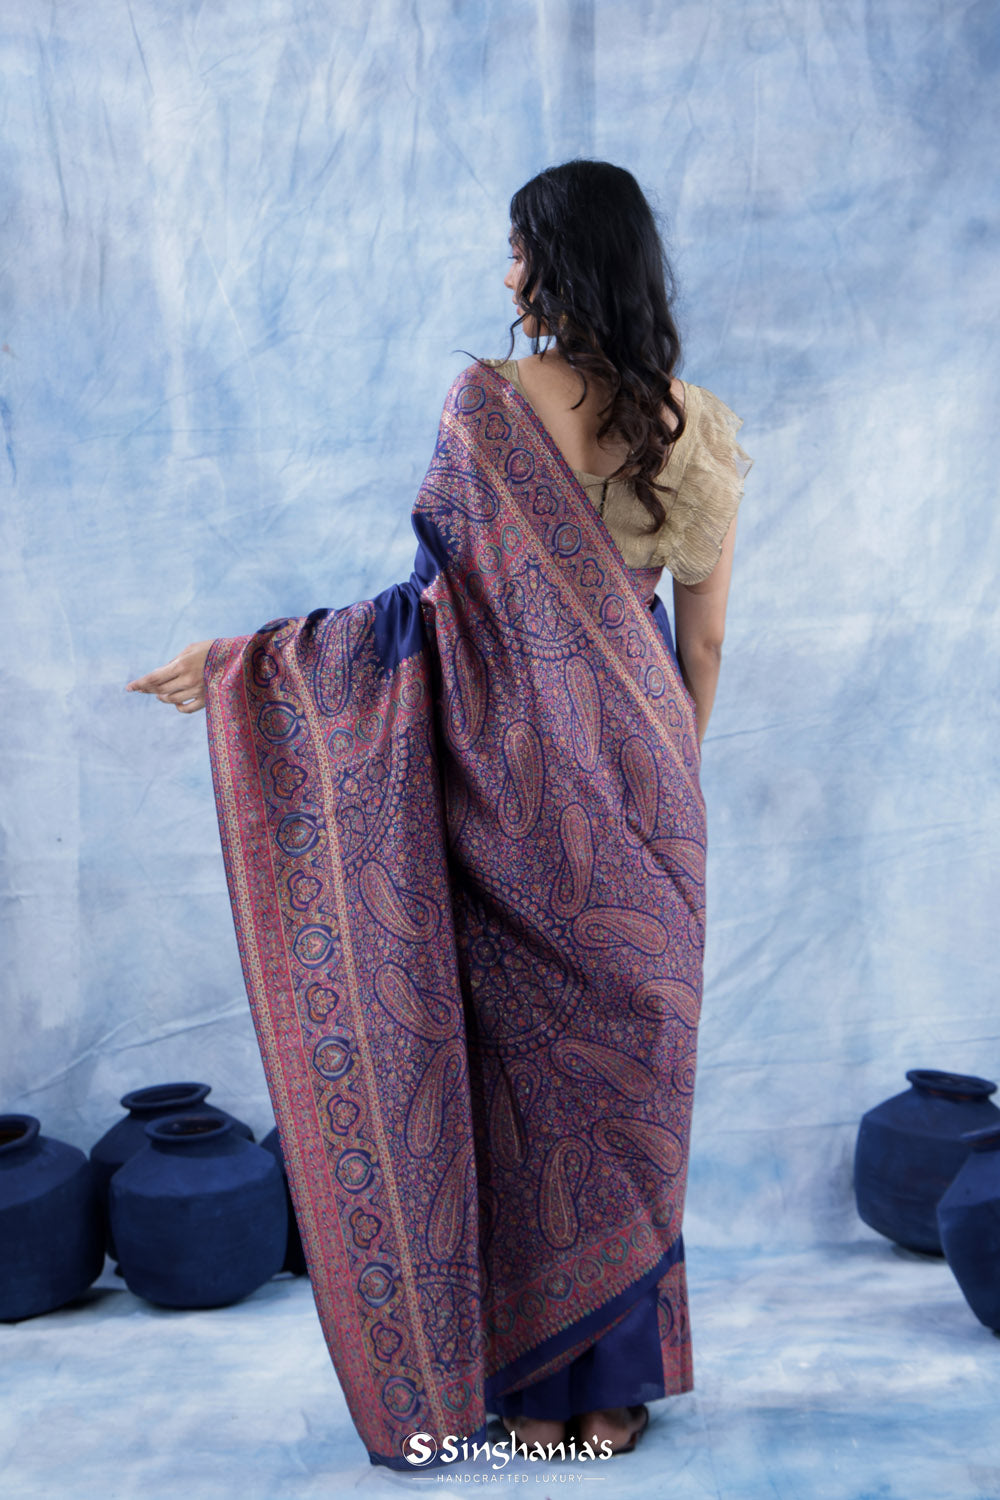 Penn Blue Kani Handloom Saree With Floral Motifs